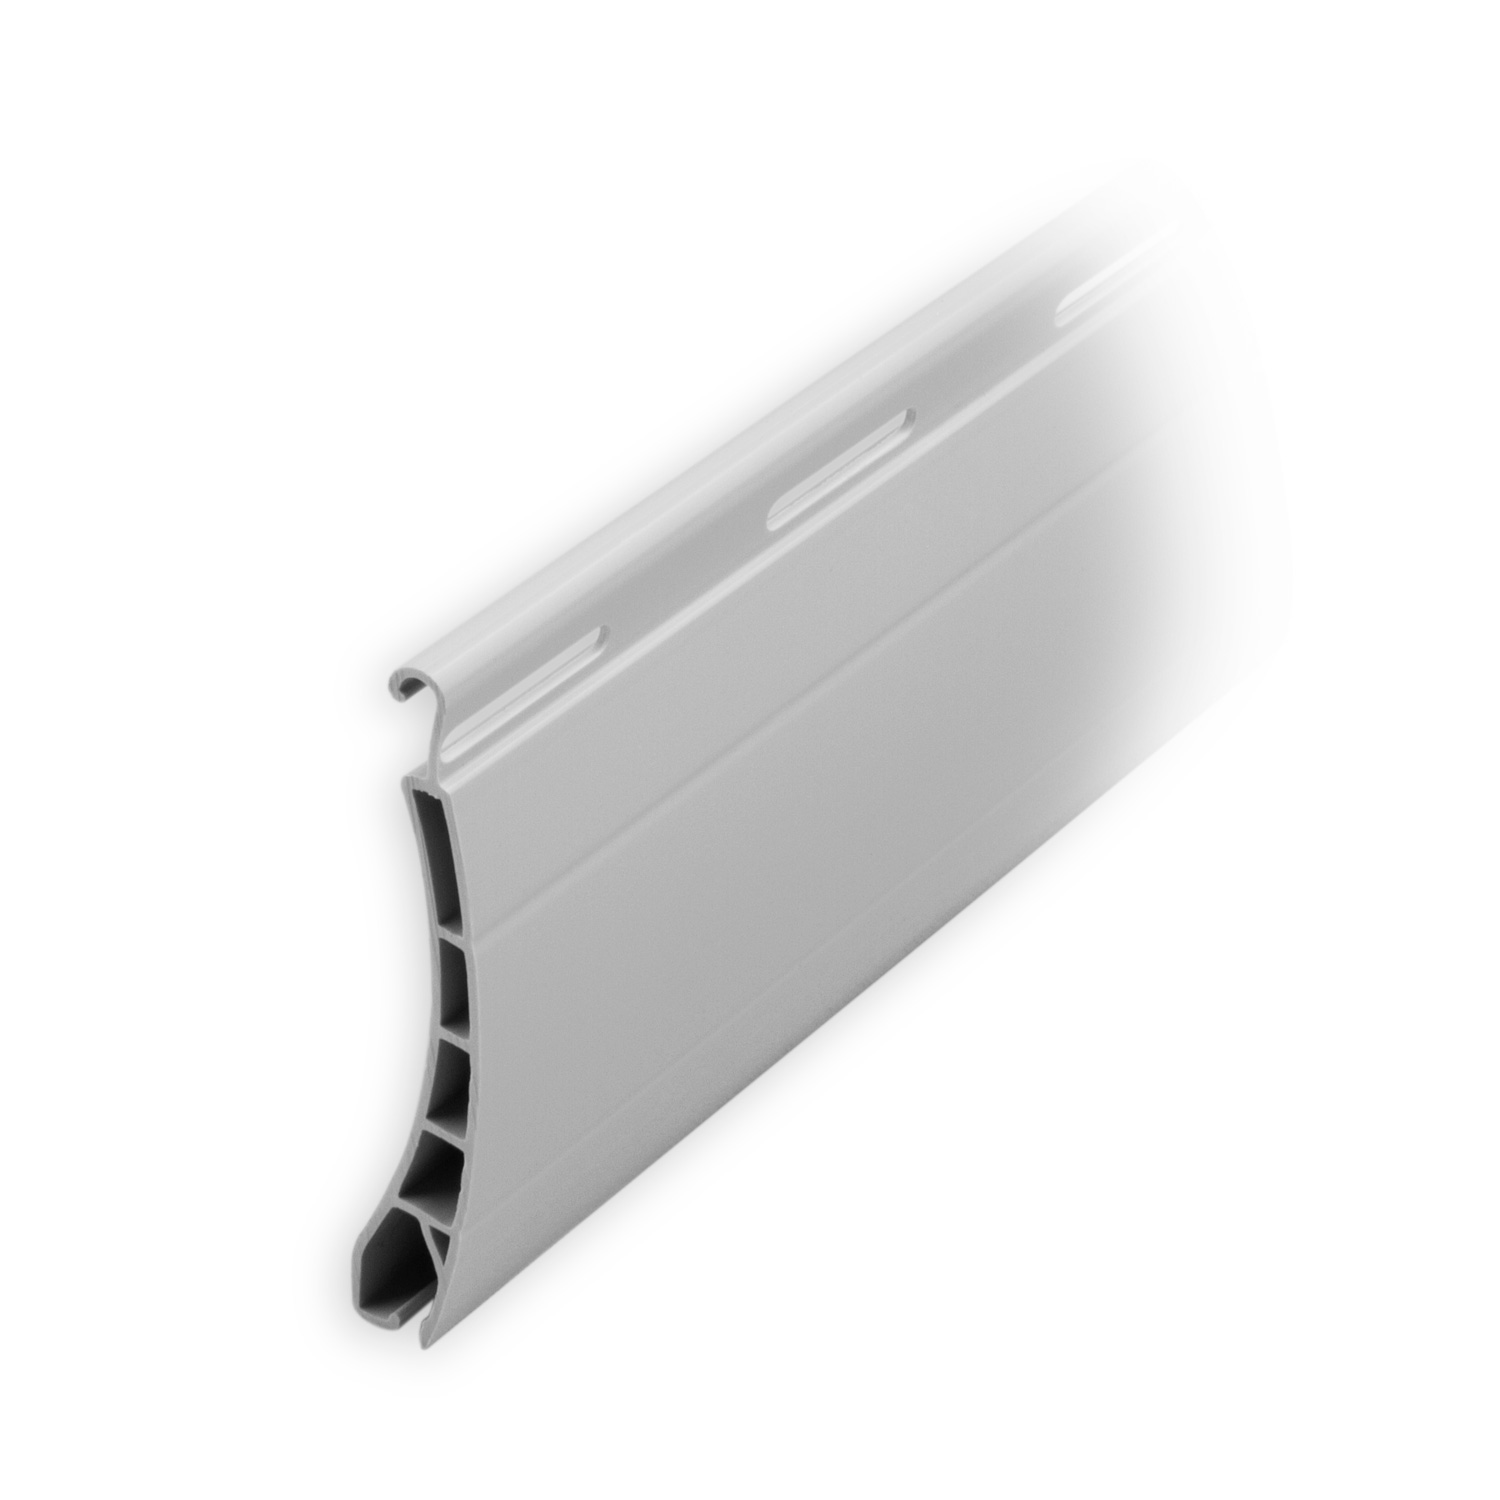 PVC rolladenpanzer to measure Mini 38 profile slats Grey-New 21,90 € m² 